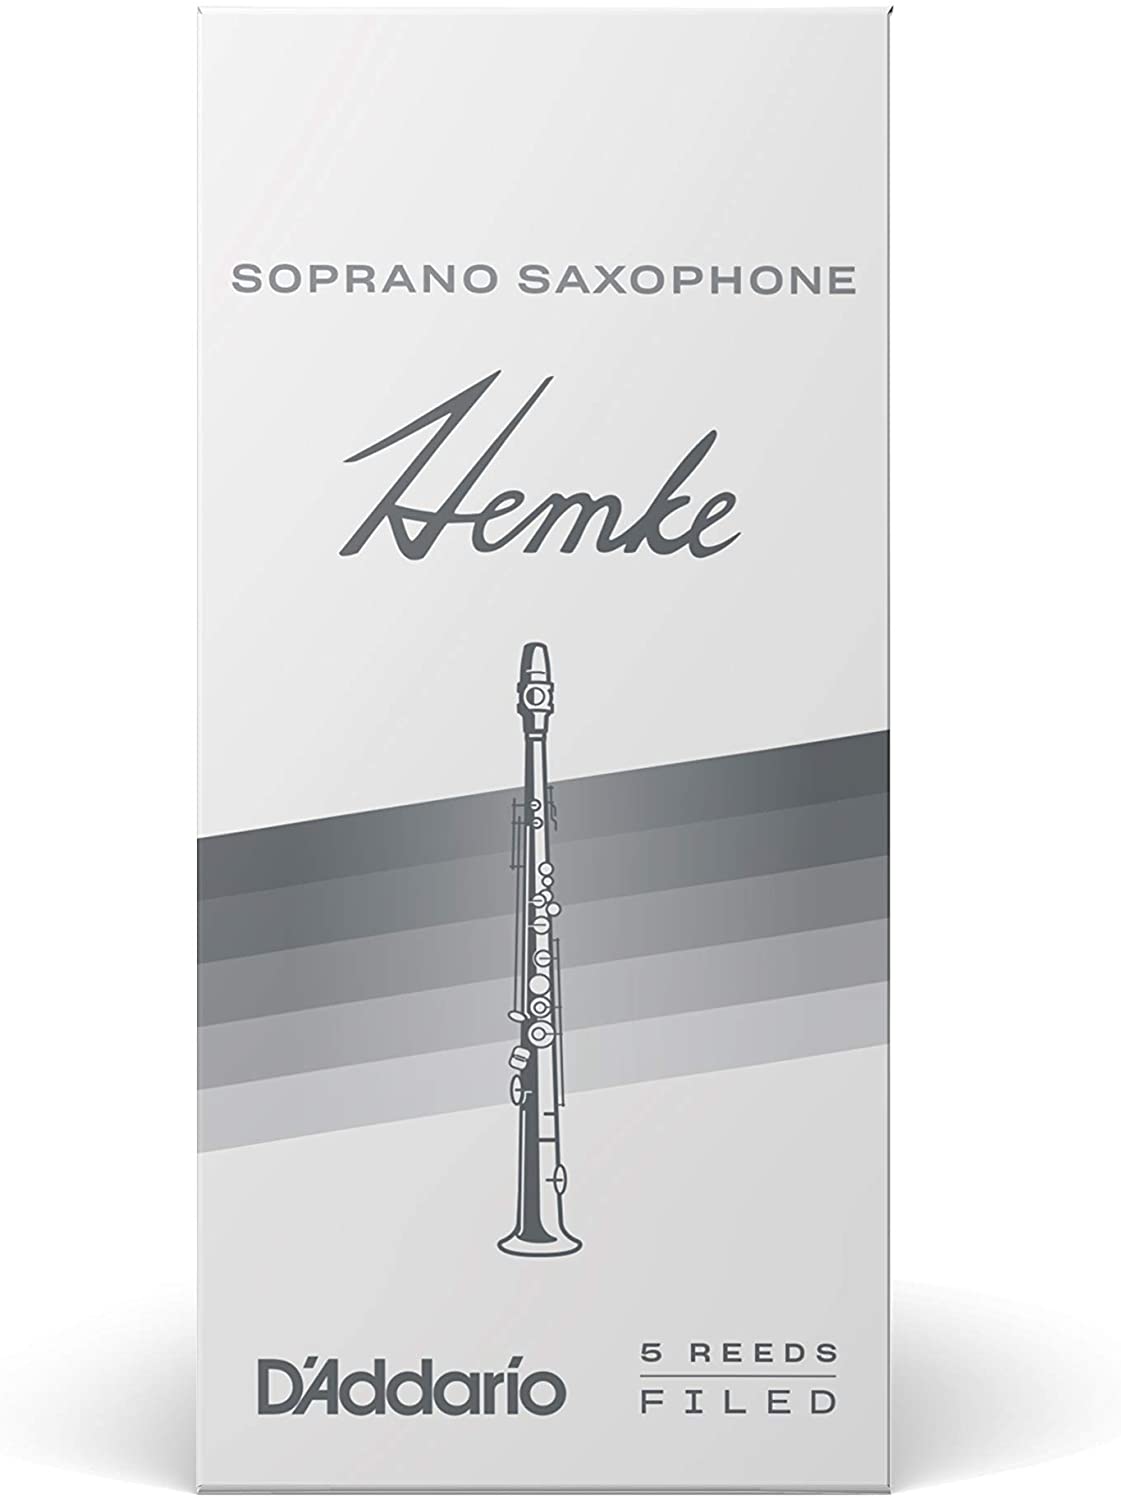 D'addario Frederick L. Hemke Series Bb Soprano Saxophone Reeds